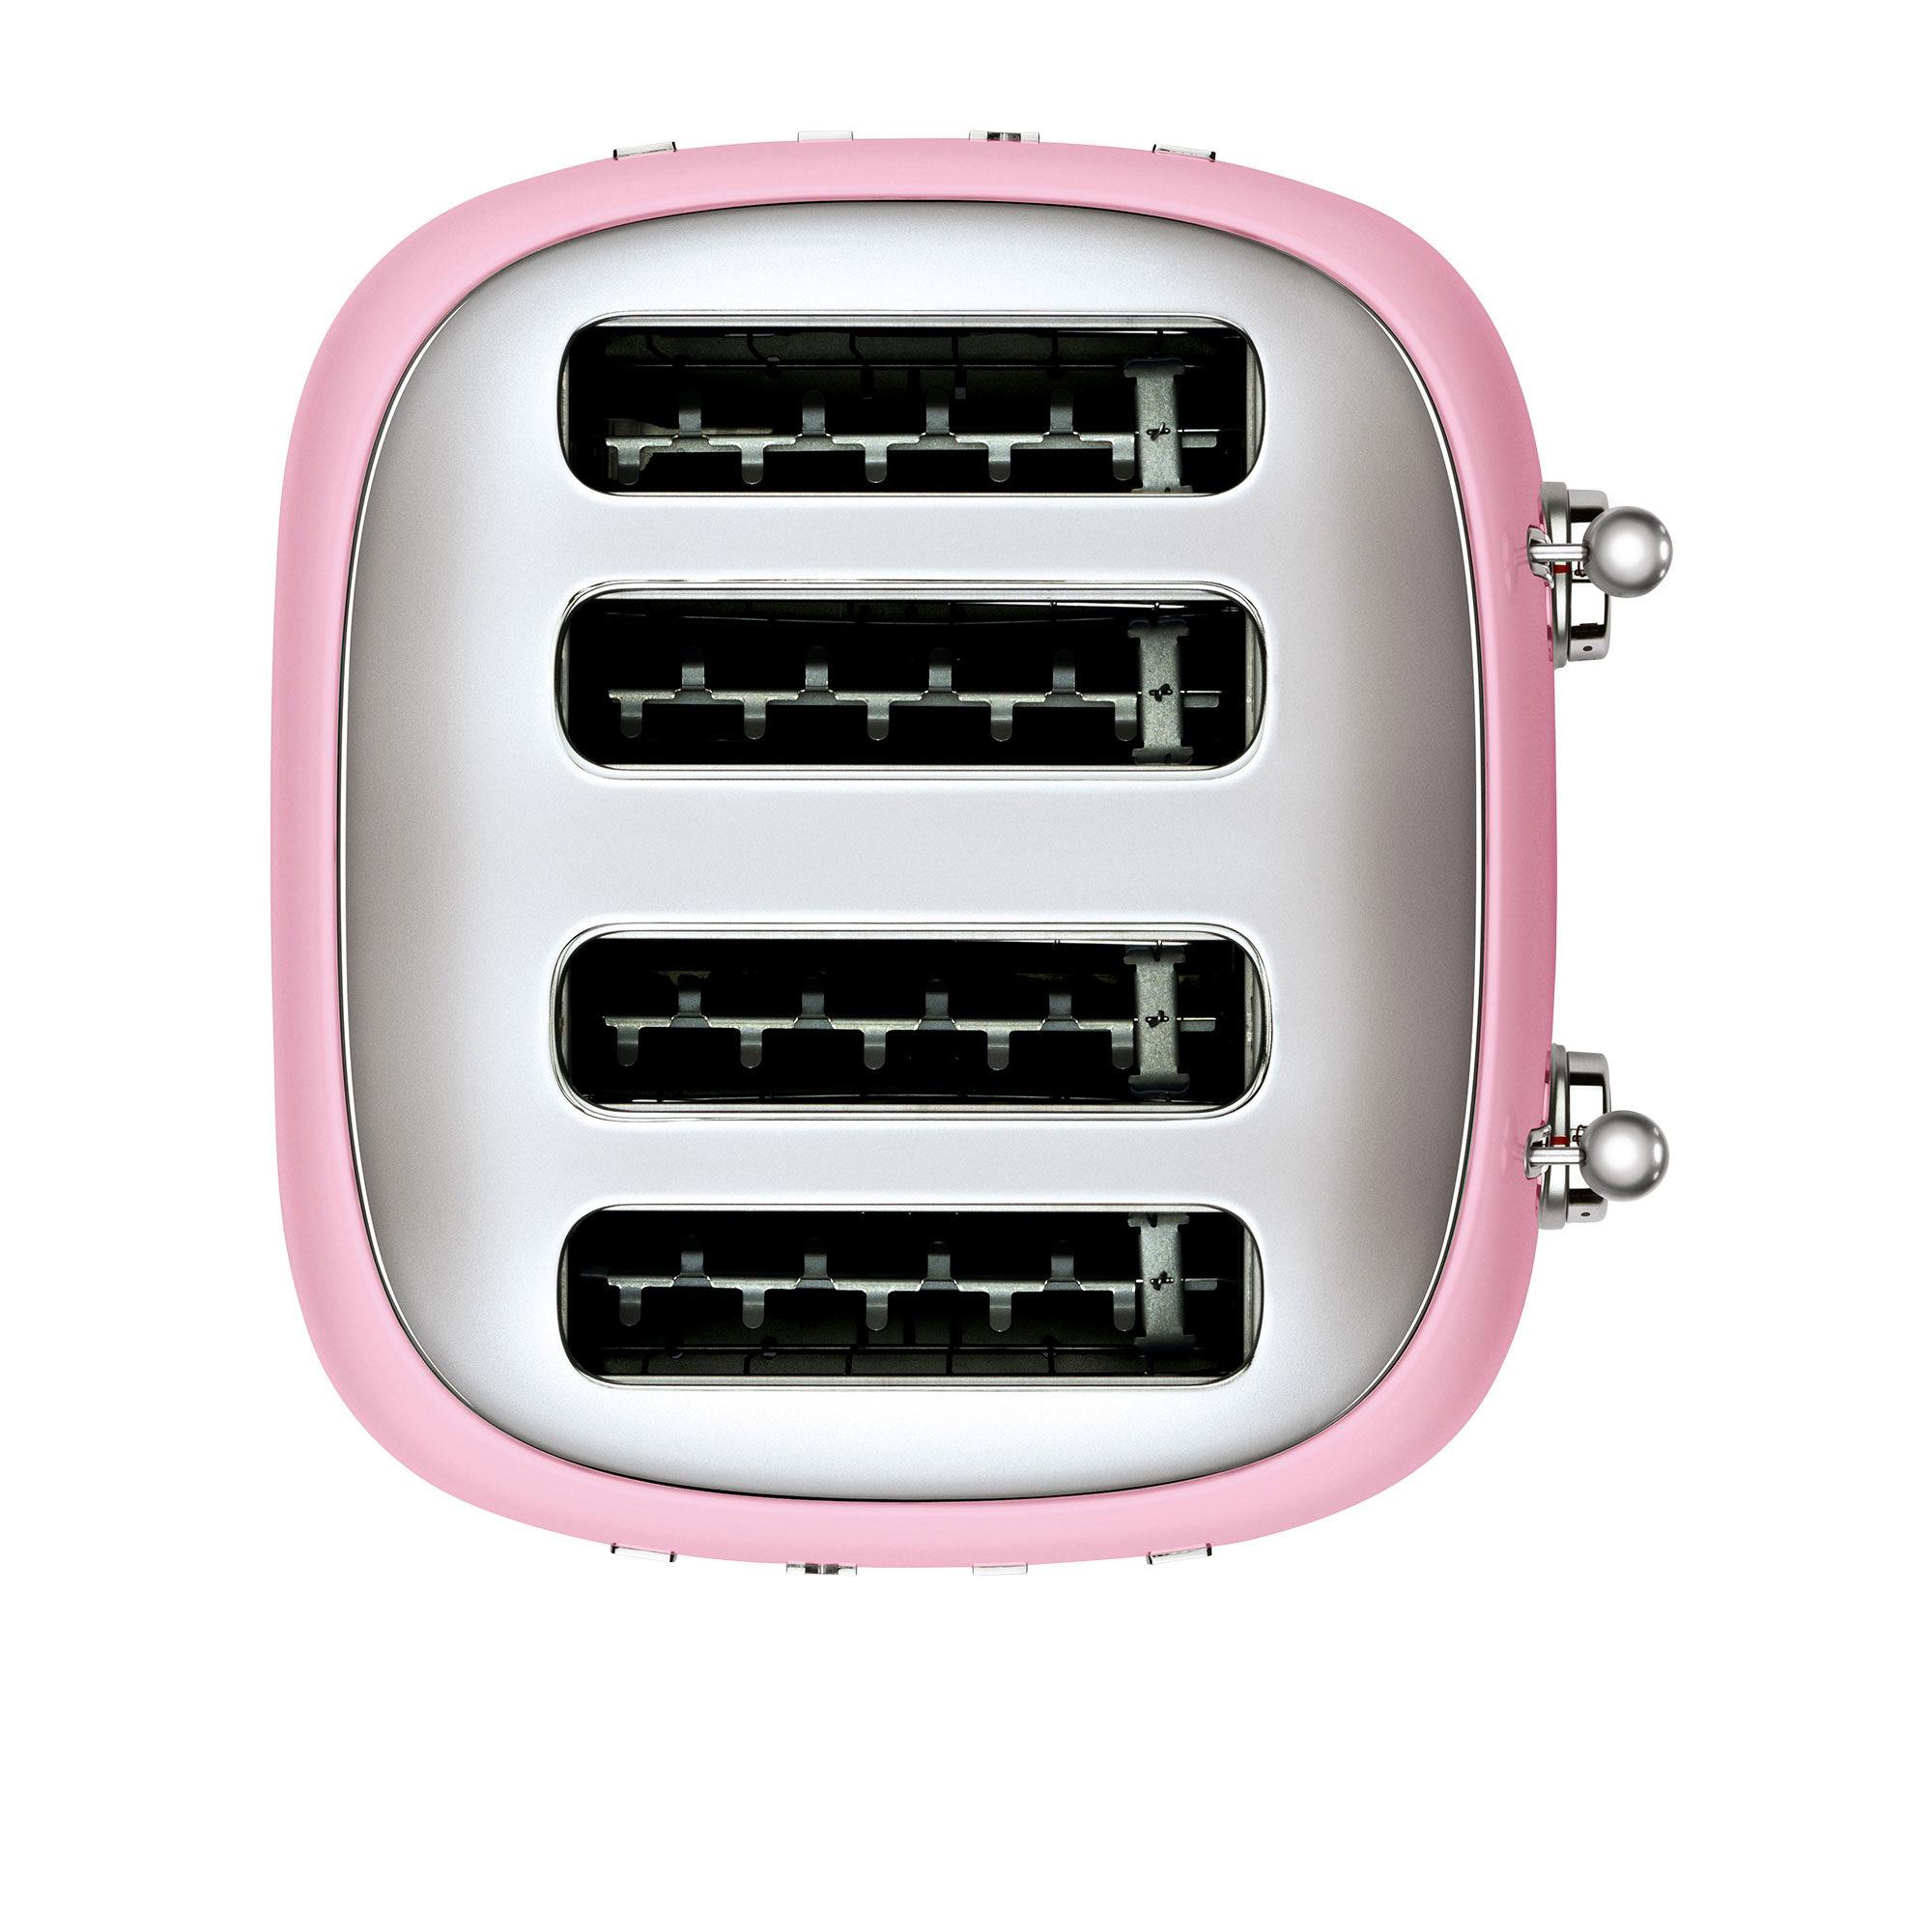 Smeg 50's Retro Style 4 Slot Toaster Pink Image 5